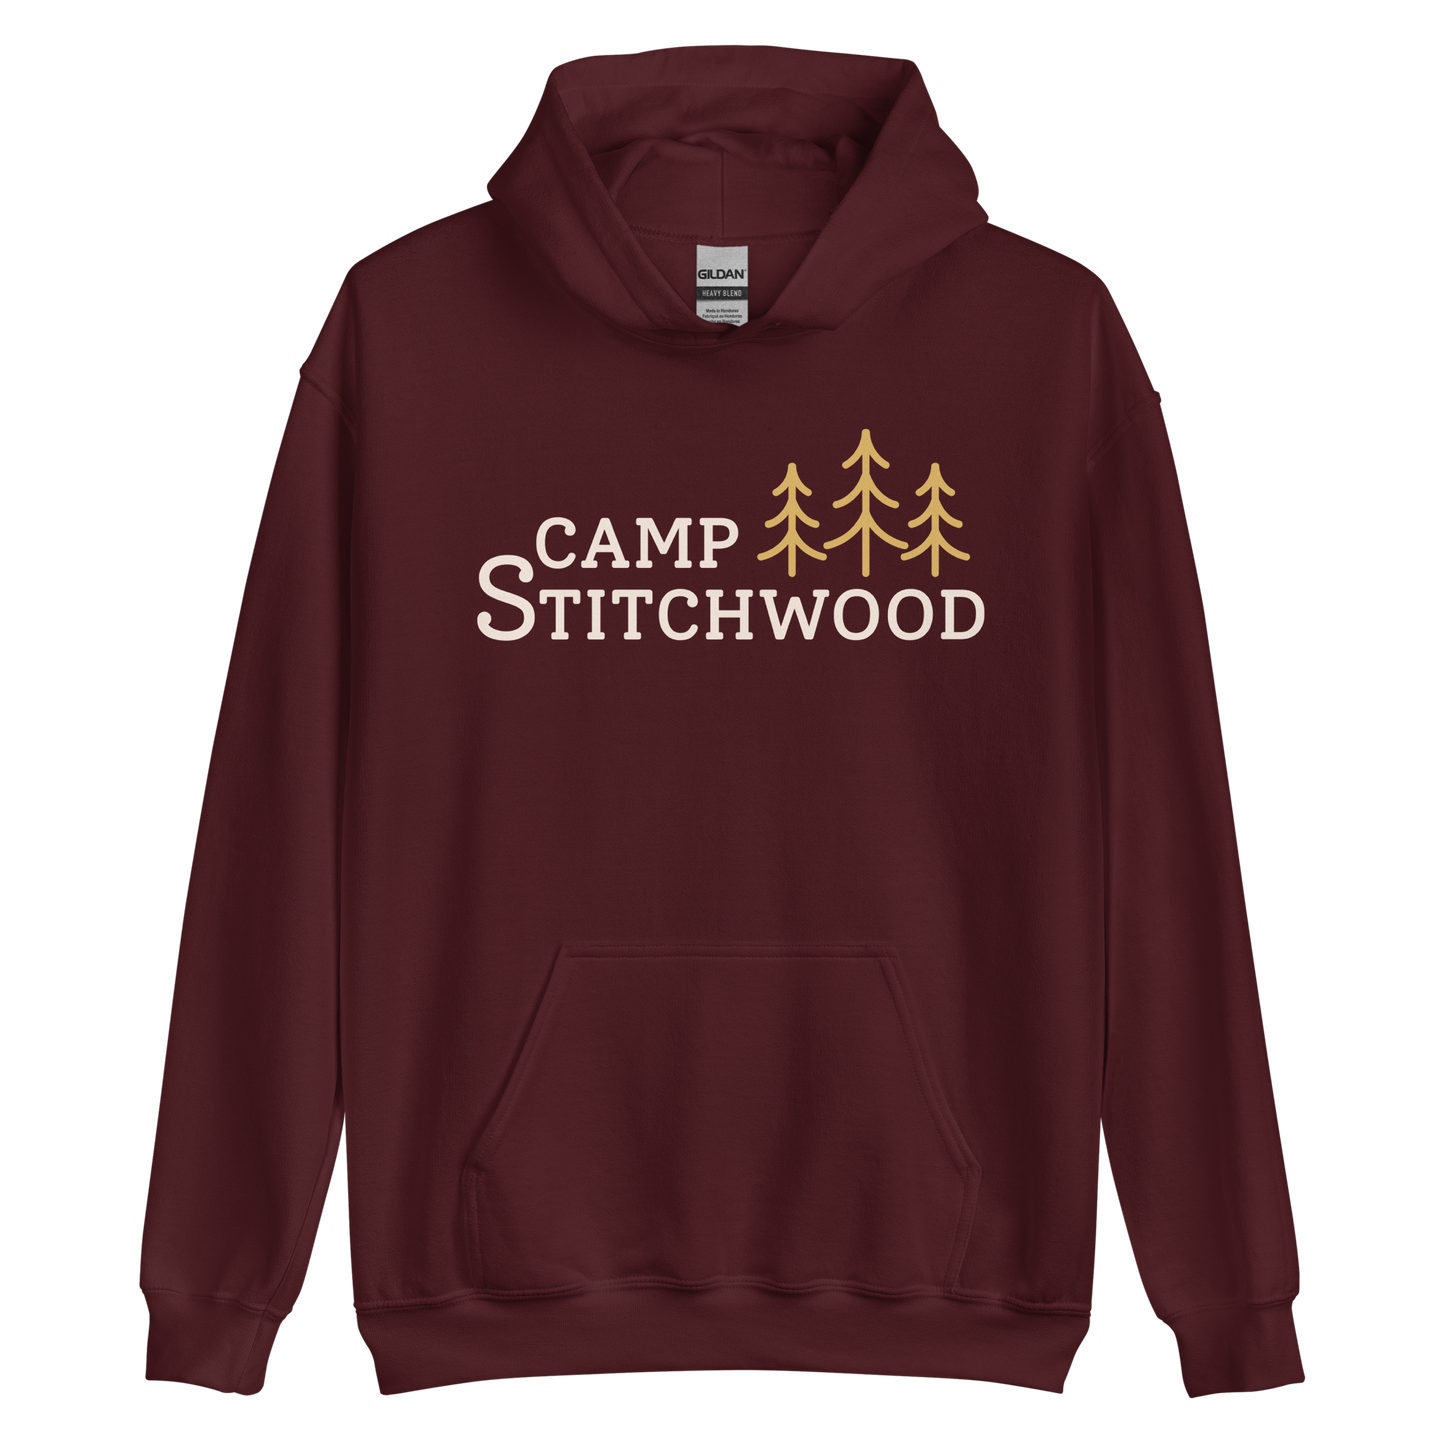 Camp Stitchwood Hoodie, Unisex